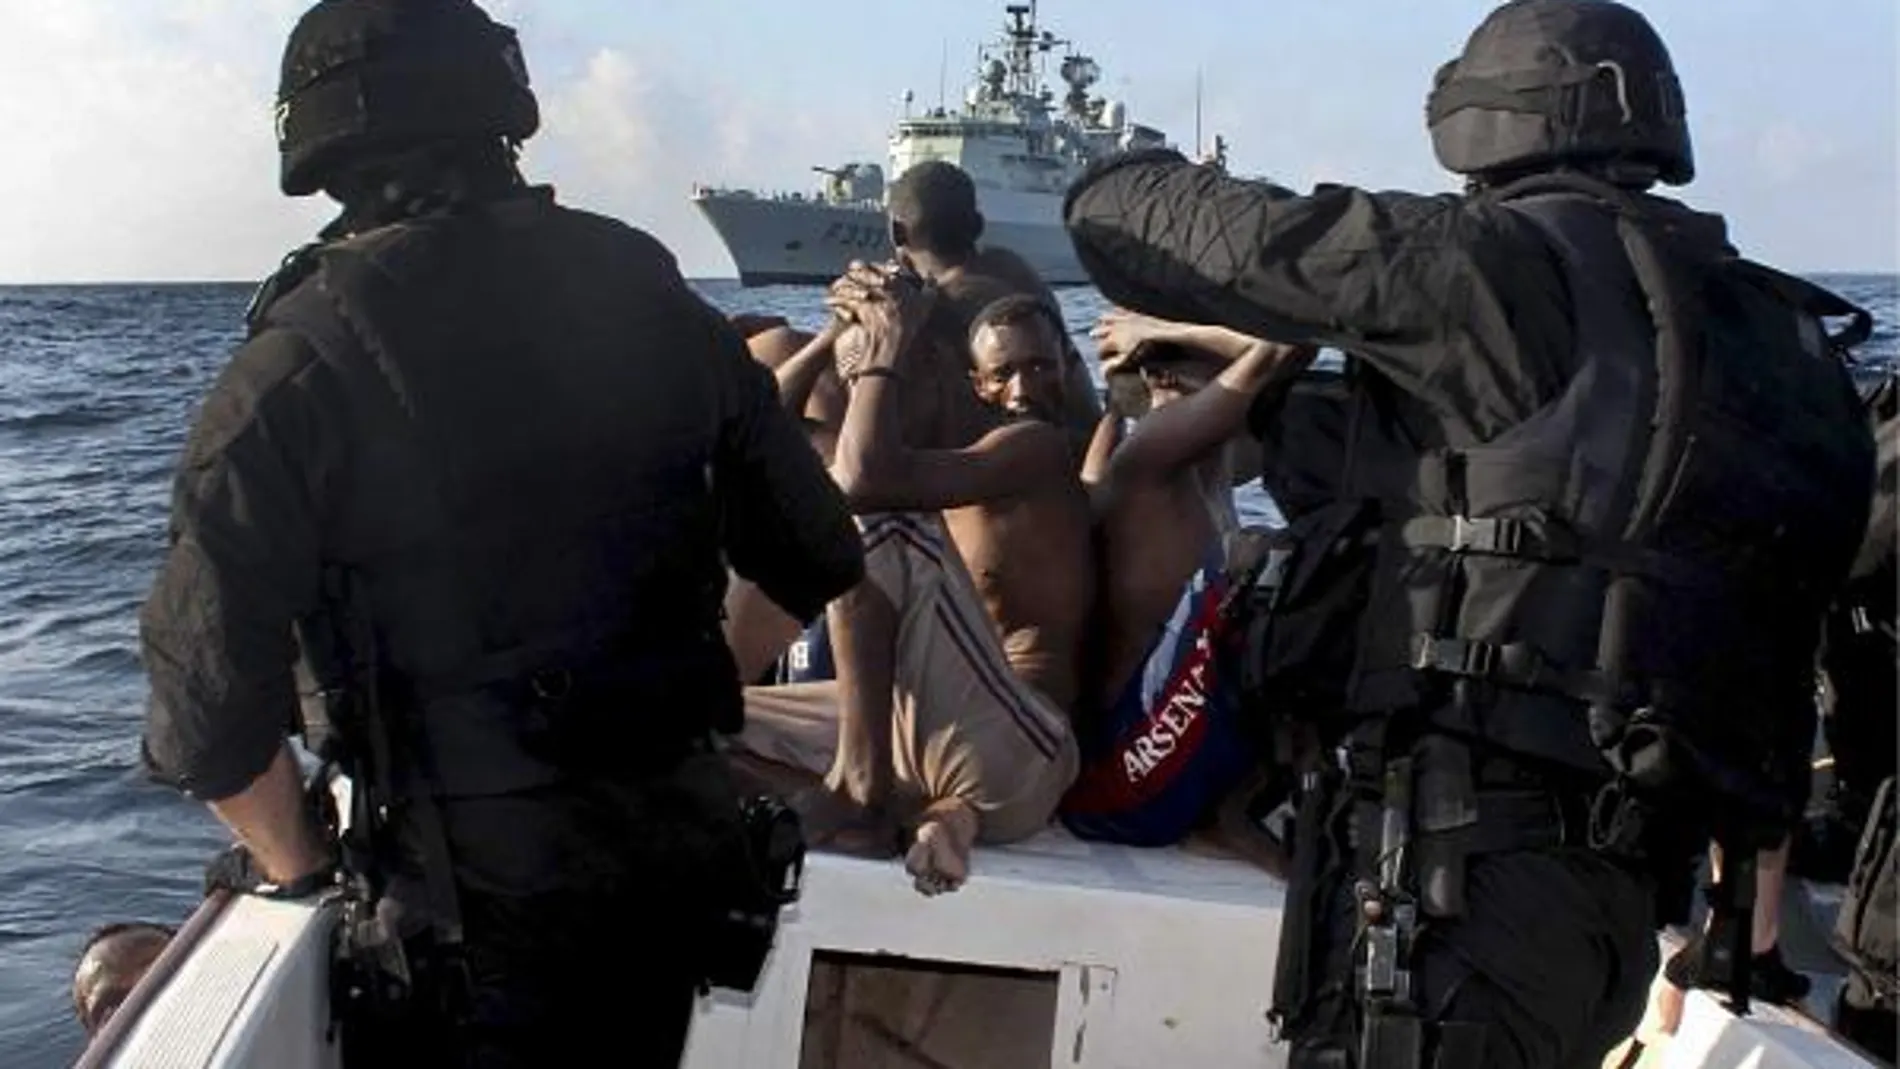 Marines portugueses de la fragata NRP "Alvares Cabral"capturan a un presunto grupo de piratas en el golfo de Adén (Somalia). 18/12/2009